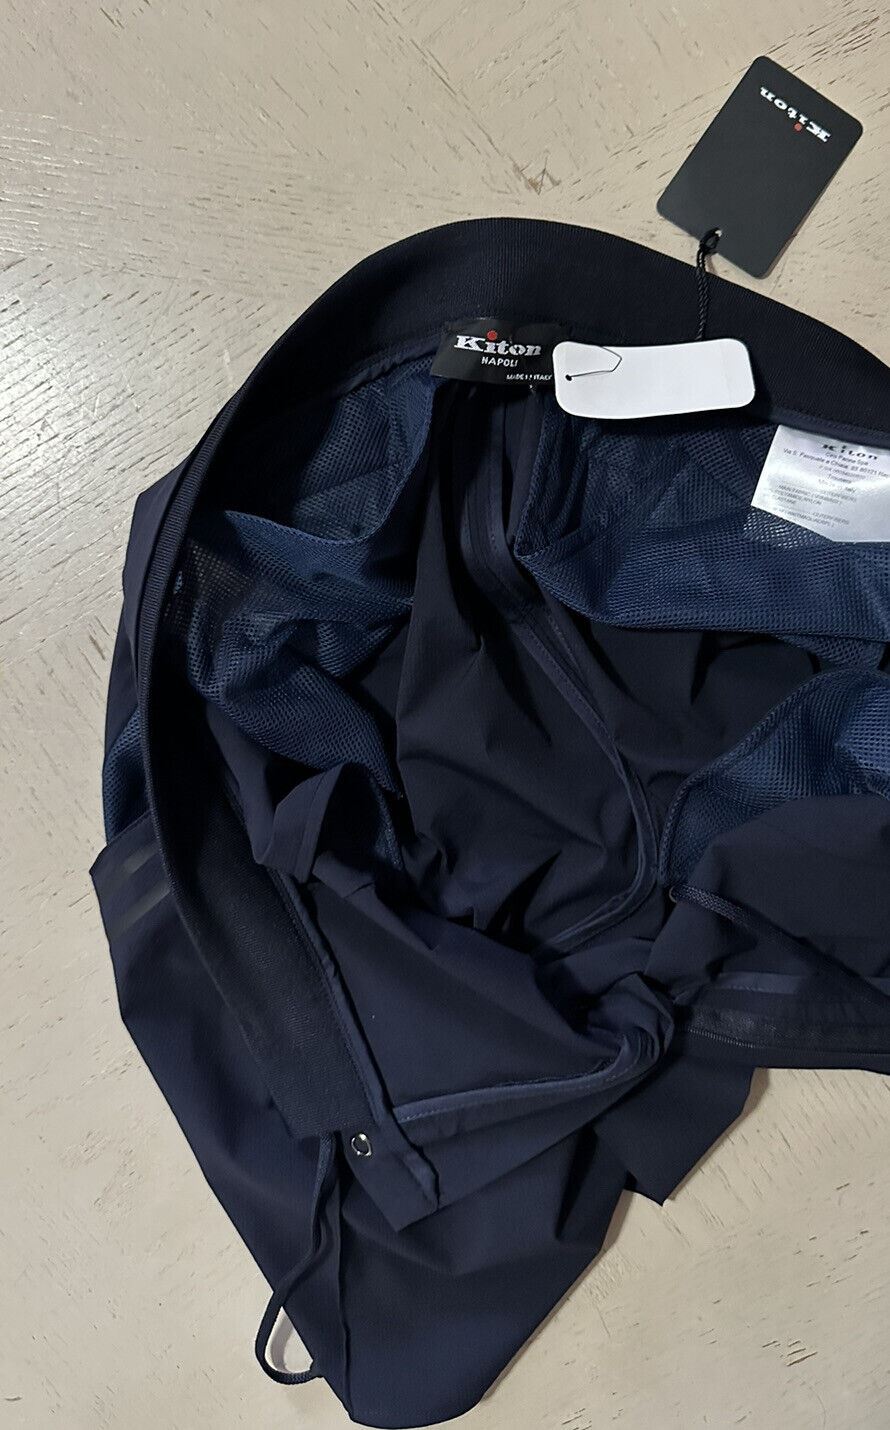 Neu mit Etikett: 1395 $ Kiton Herren-Nylon-Shorts, Farbe Marineblau, Größe 40 US/56 EU, Italien